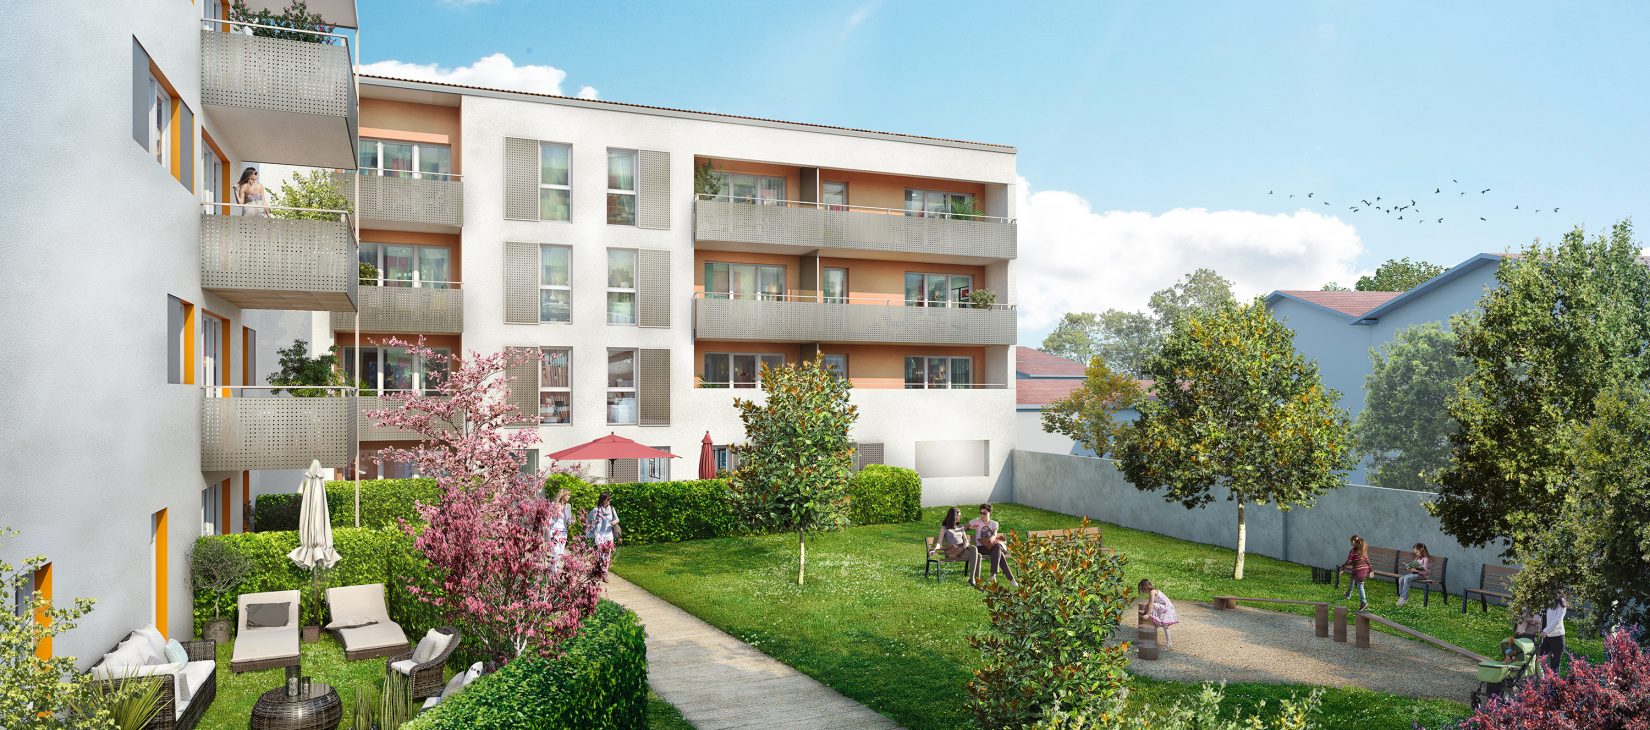 Achat appartement neuf Vaulx-en-Velin vue jardins